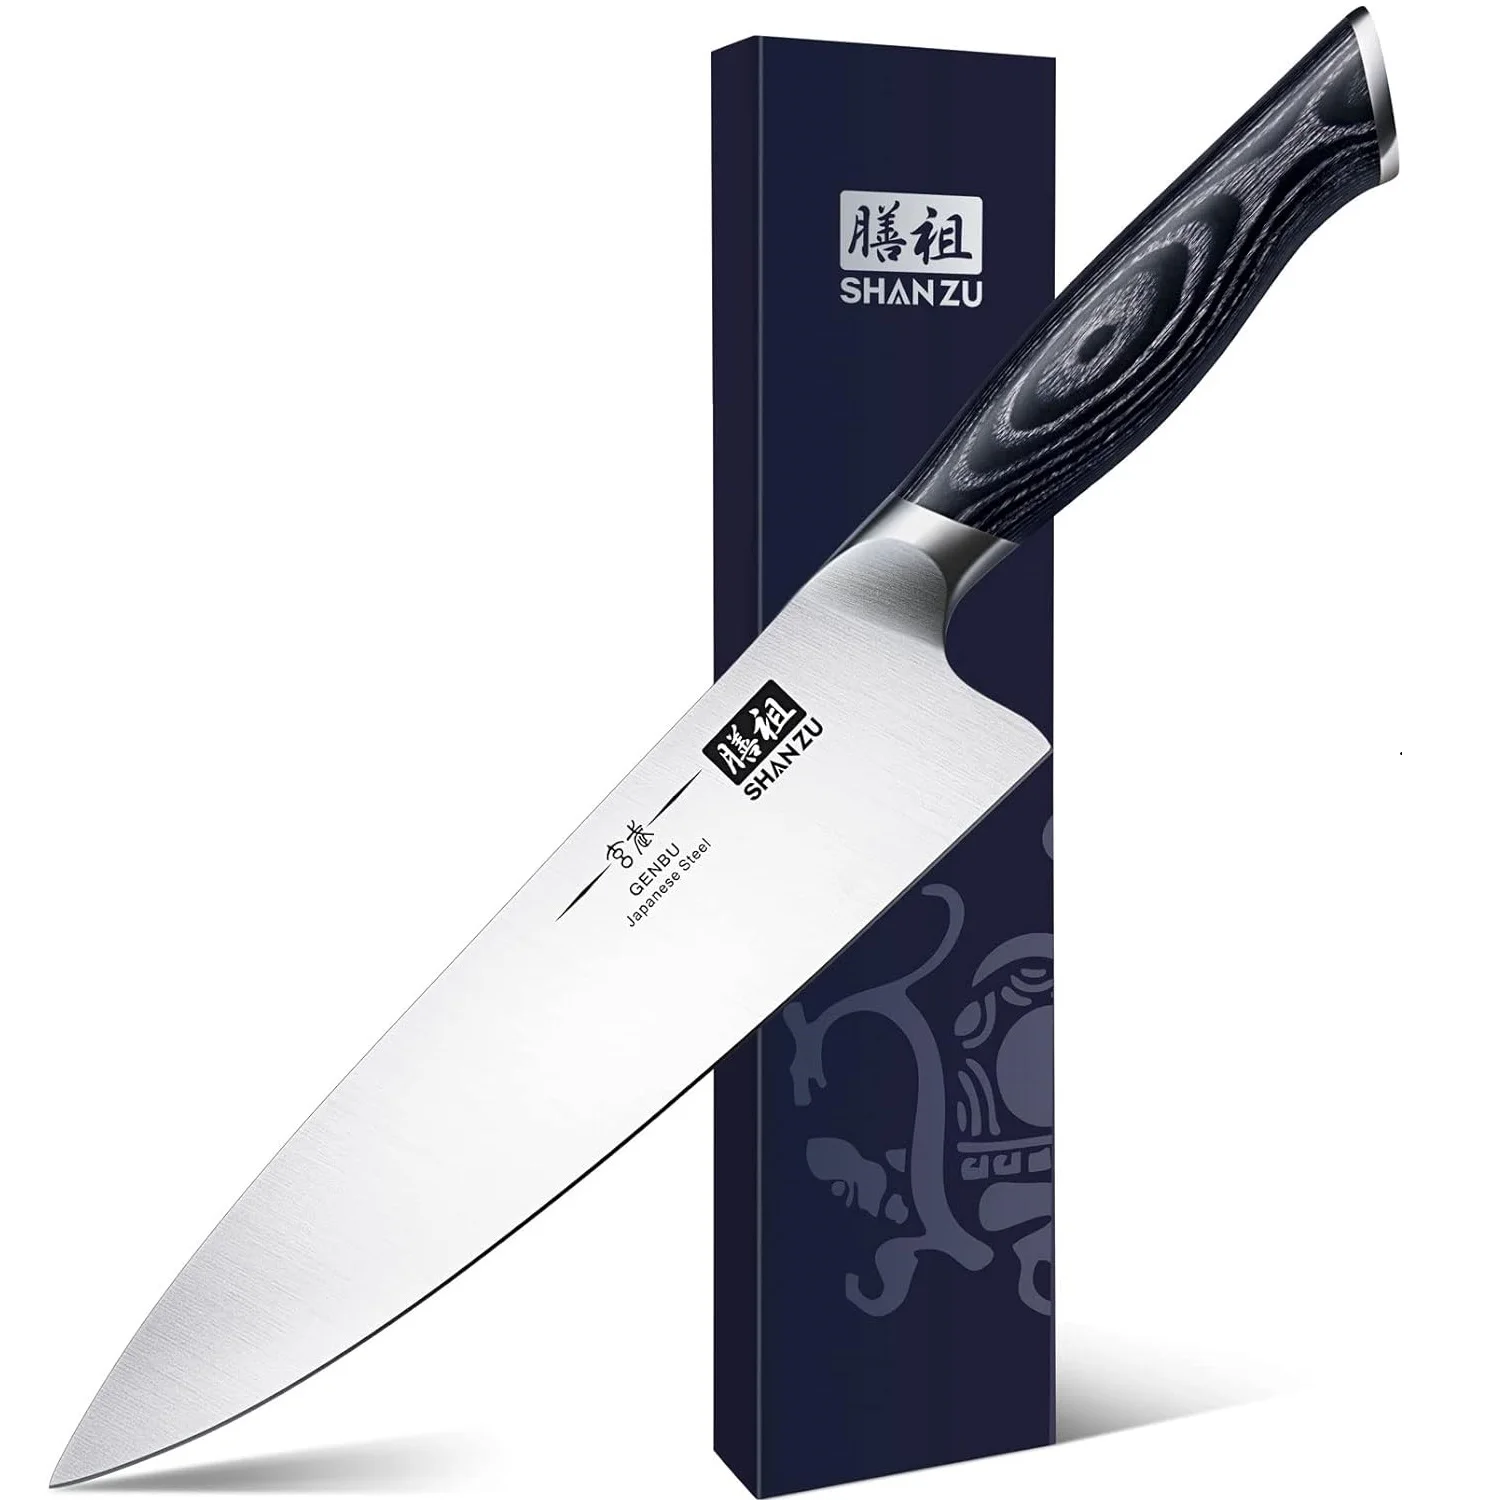 SHAN ZU-cuchillo de Chef japonés de 8 pulgadas, cuchillos afilados